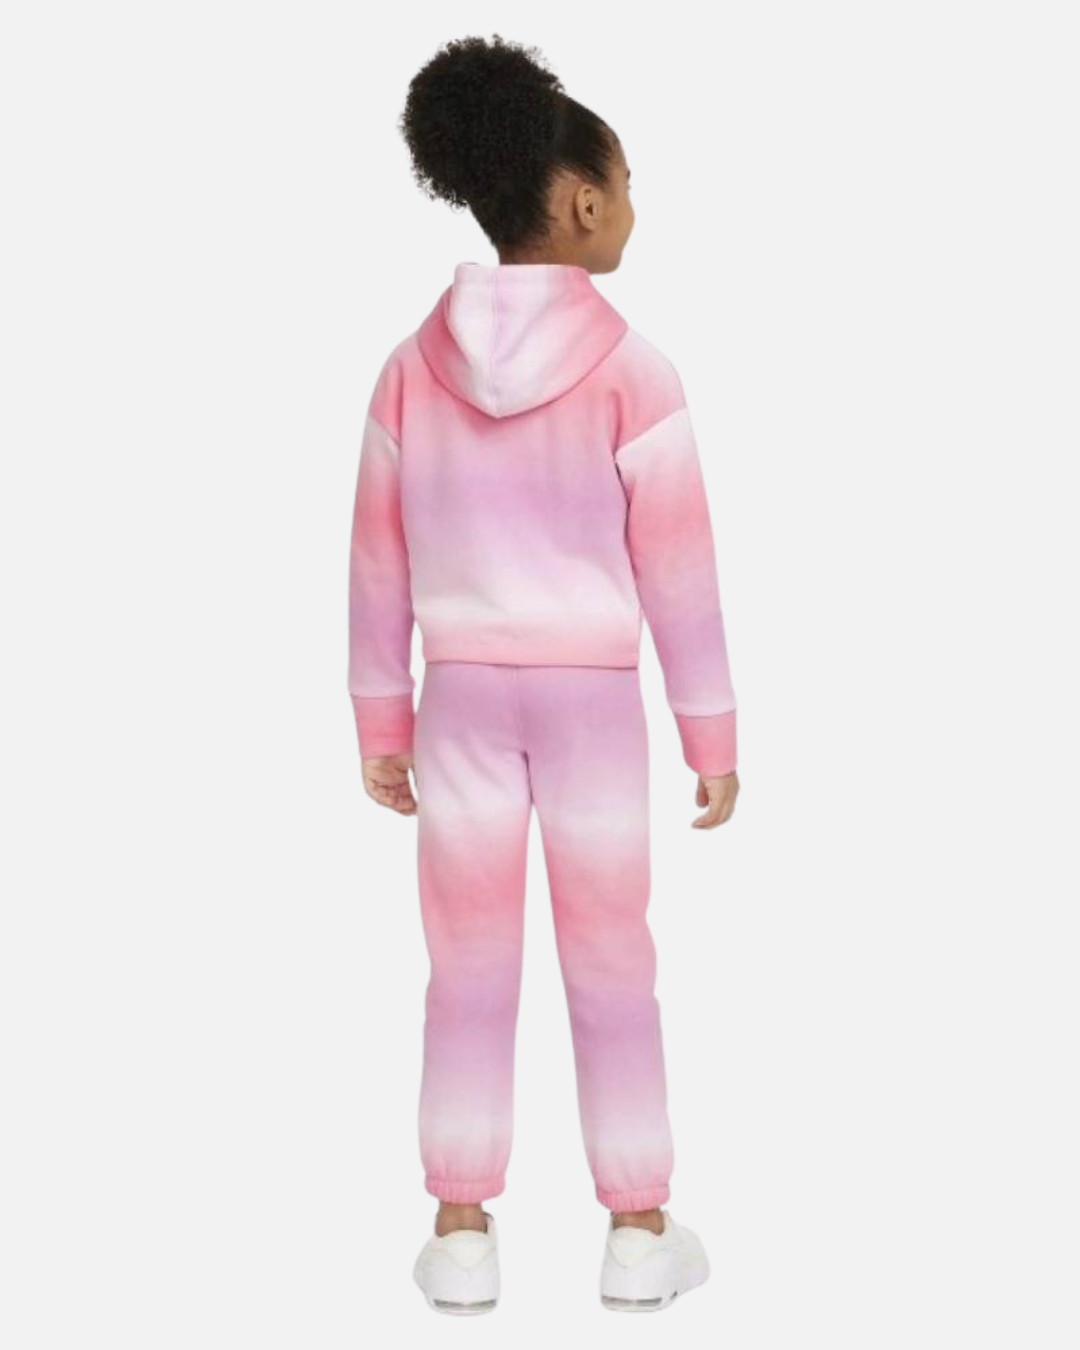 Girls' Nike Sportswear Set - Pink